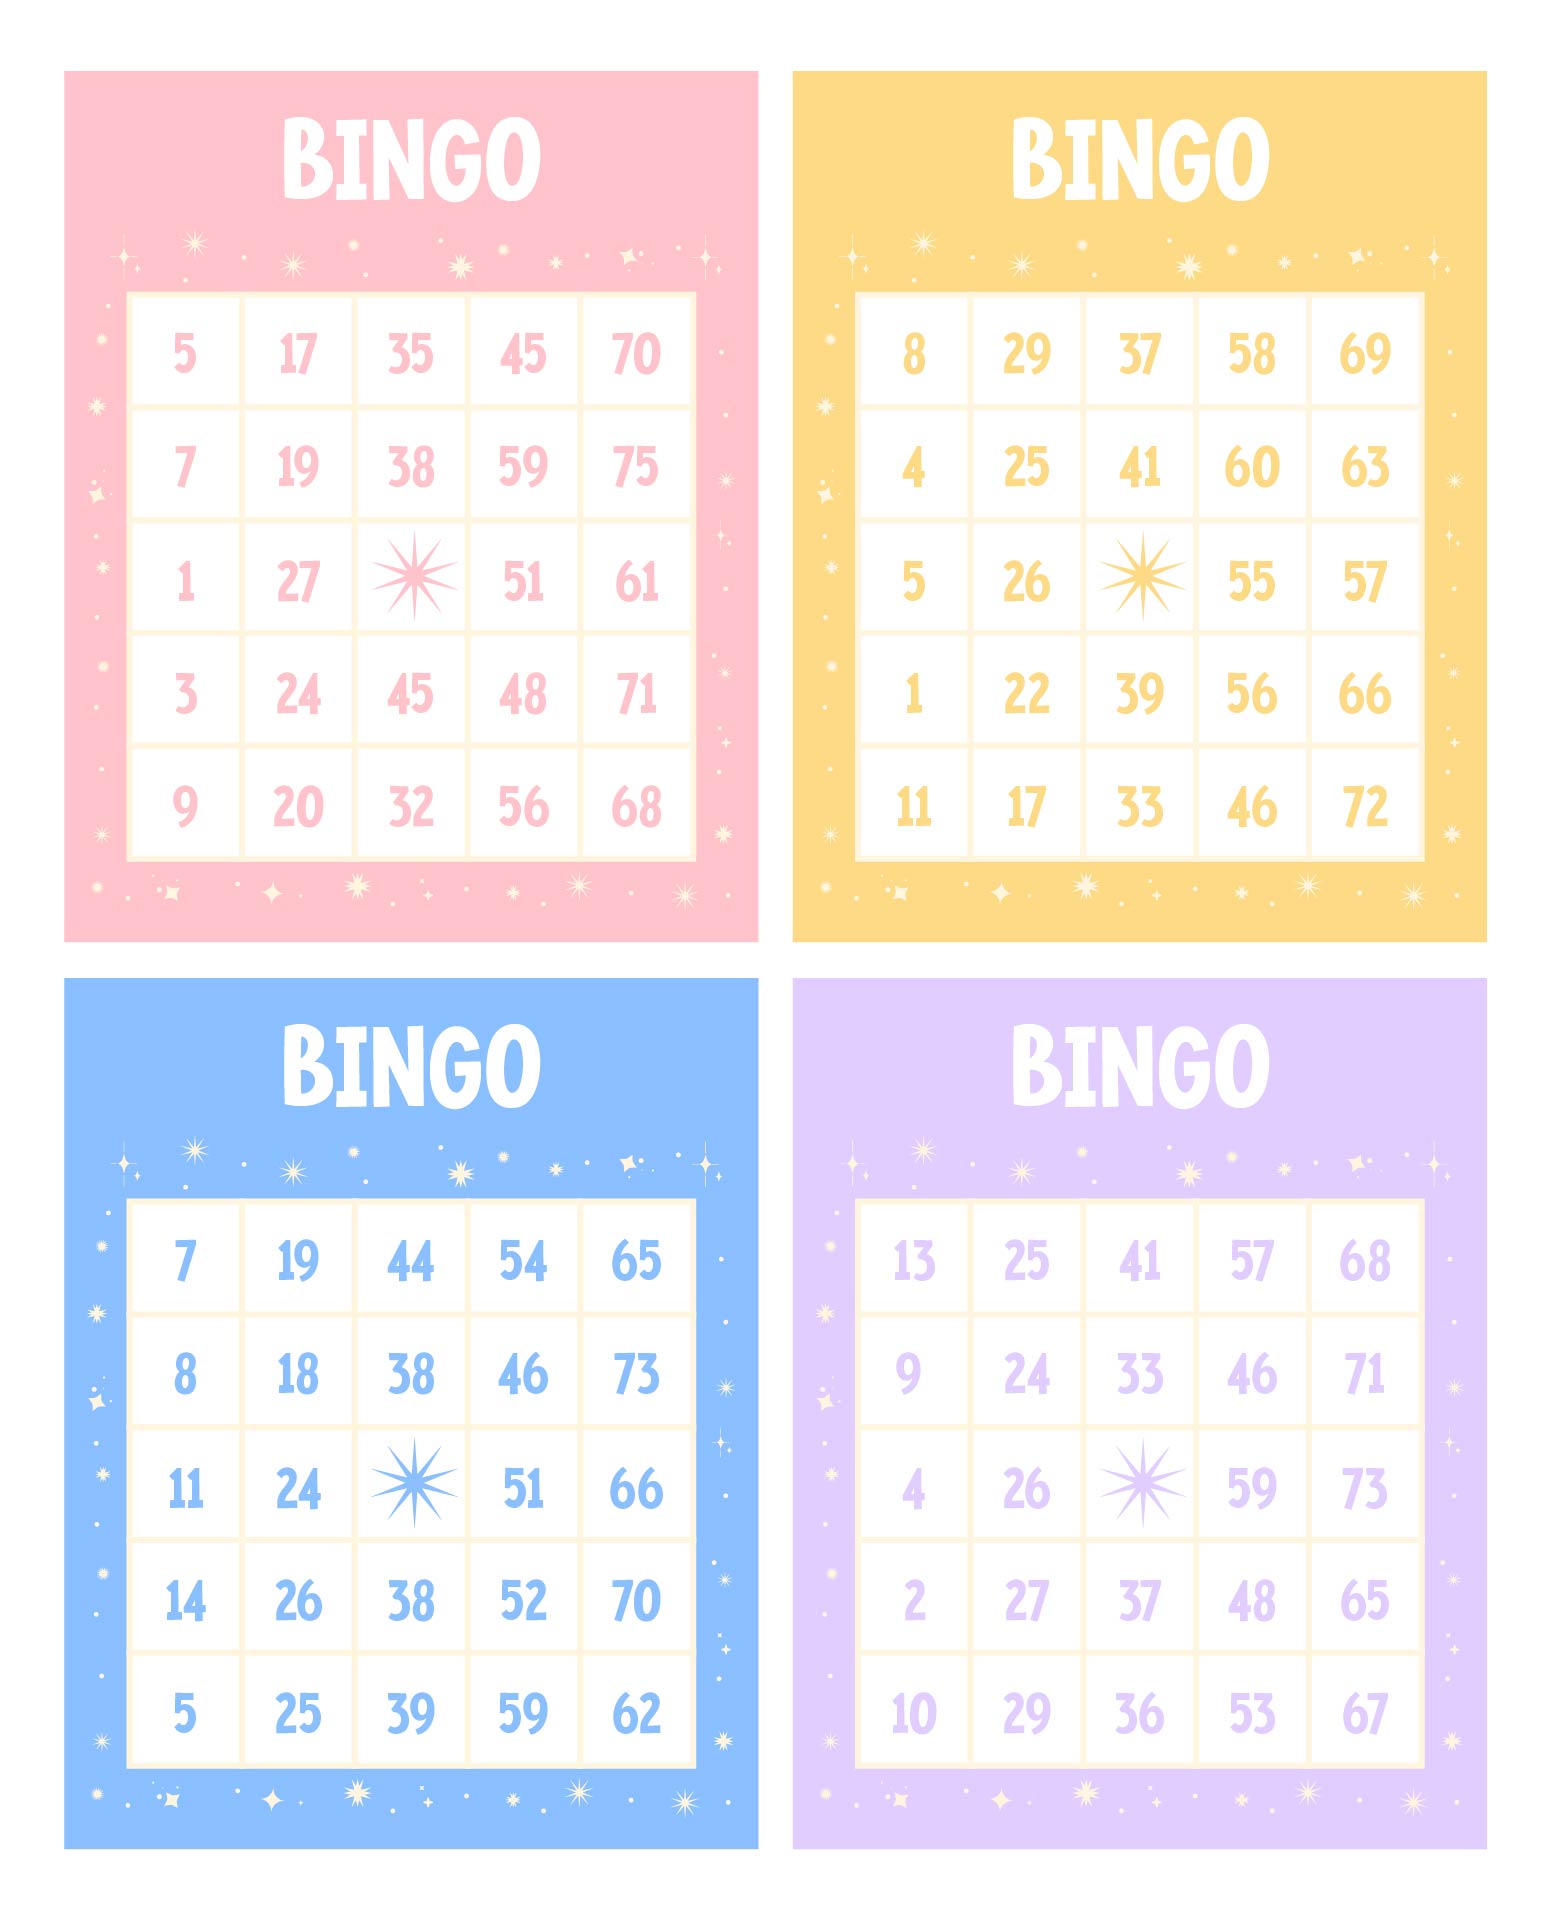 Large Bingo Cards To Print Free / Custom Bingo Cards to Download, Print